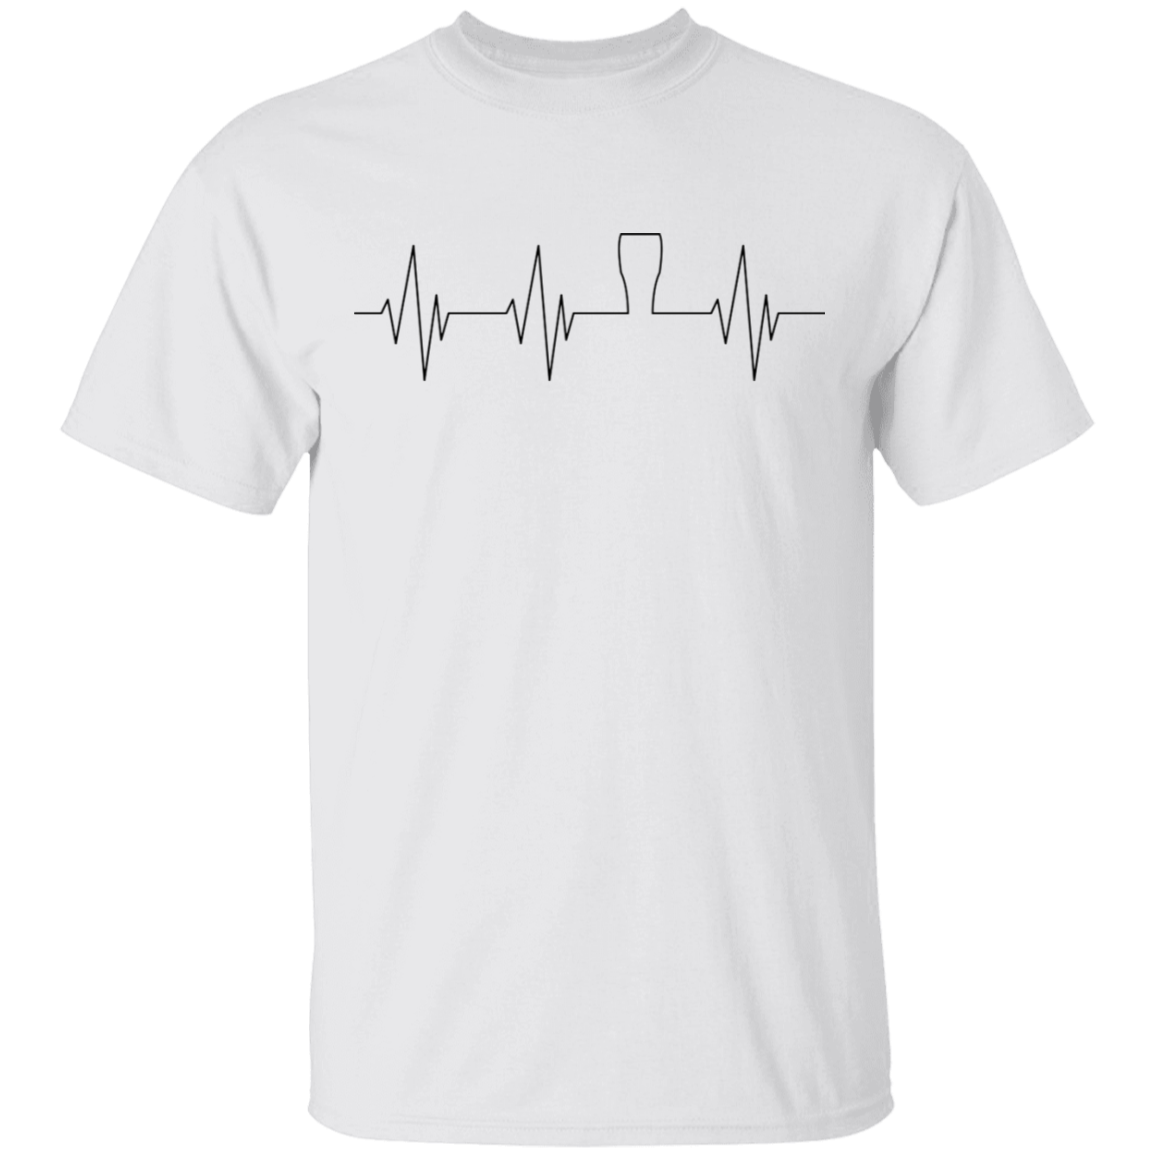 Beer Heartbeat T-Shirt | eBay